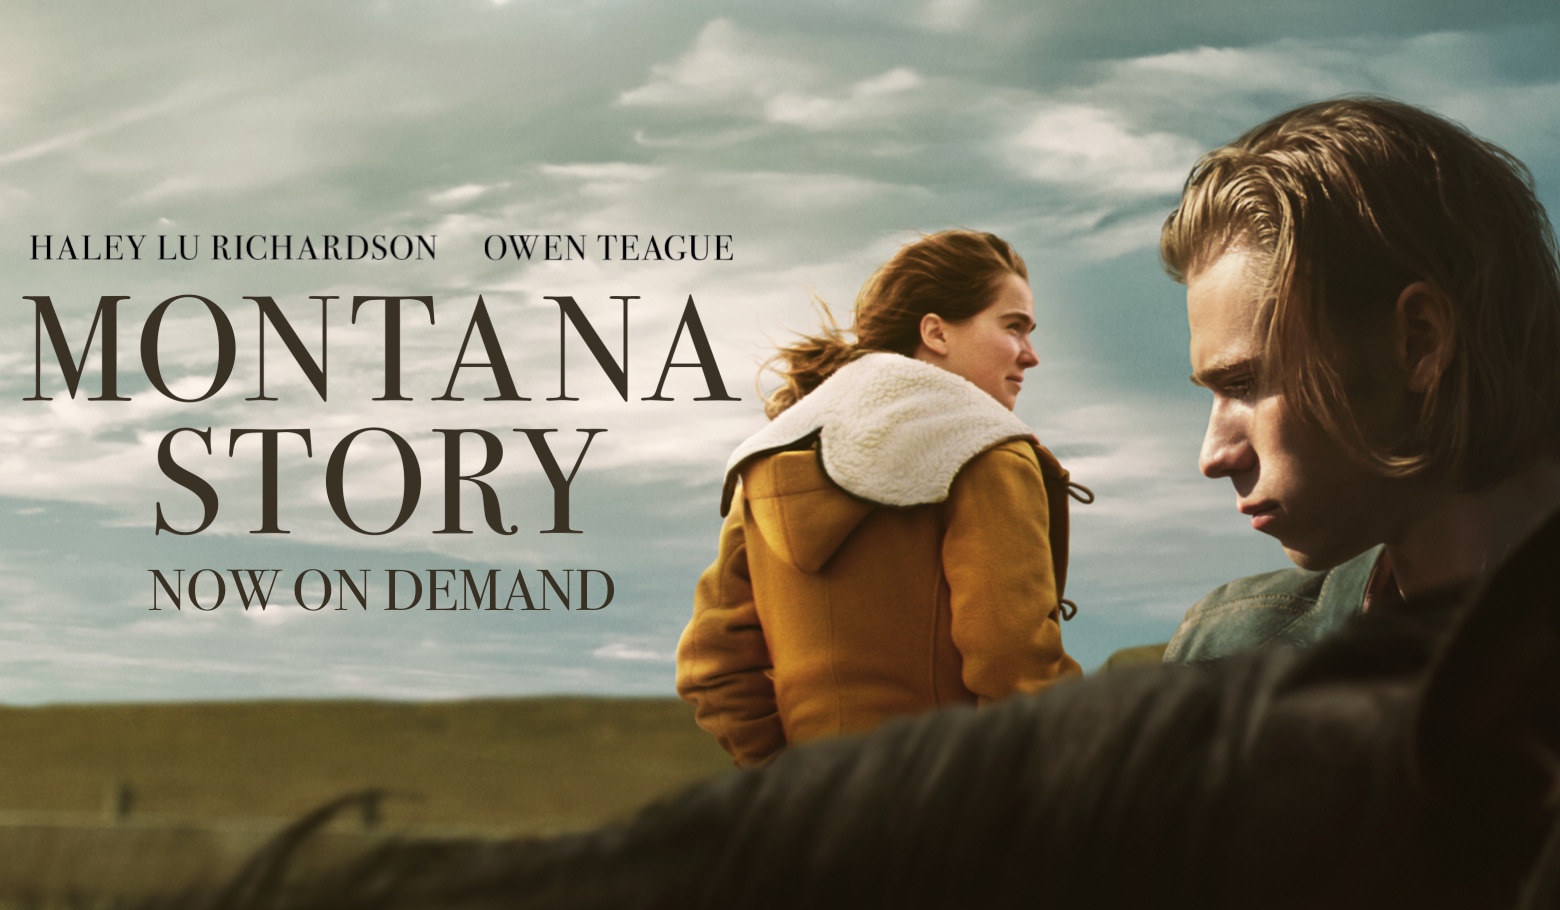 Montana Story movie poster